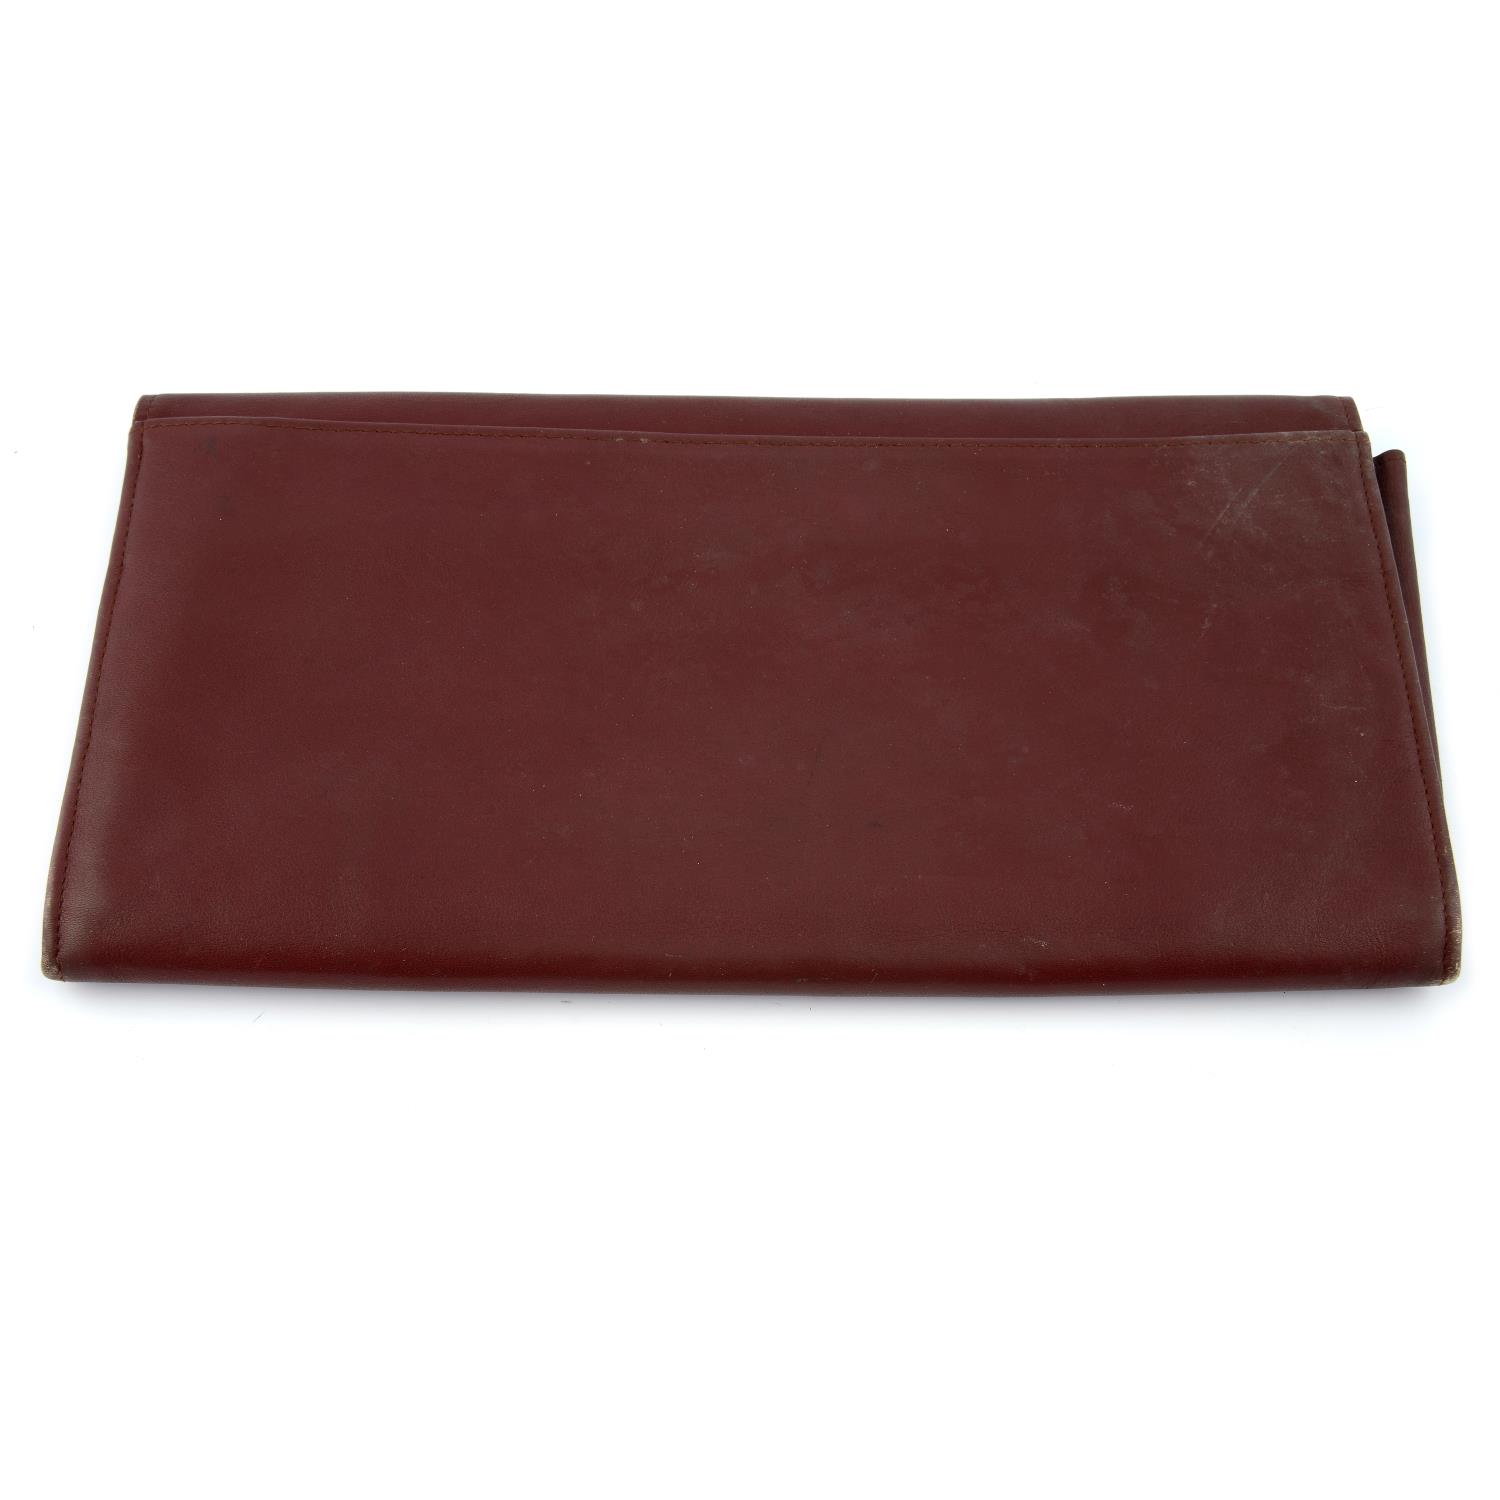 CARTIER - a Bordeaux leather travel wallet. - Image 2 of 3